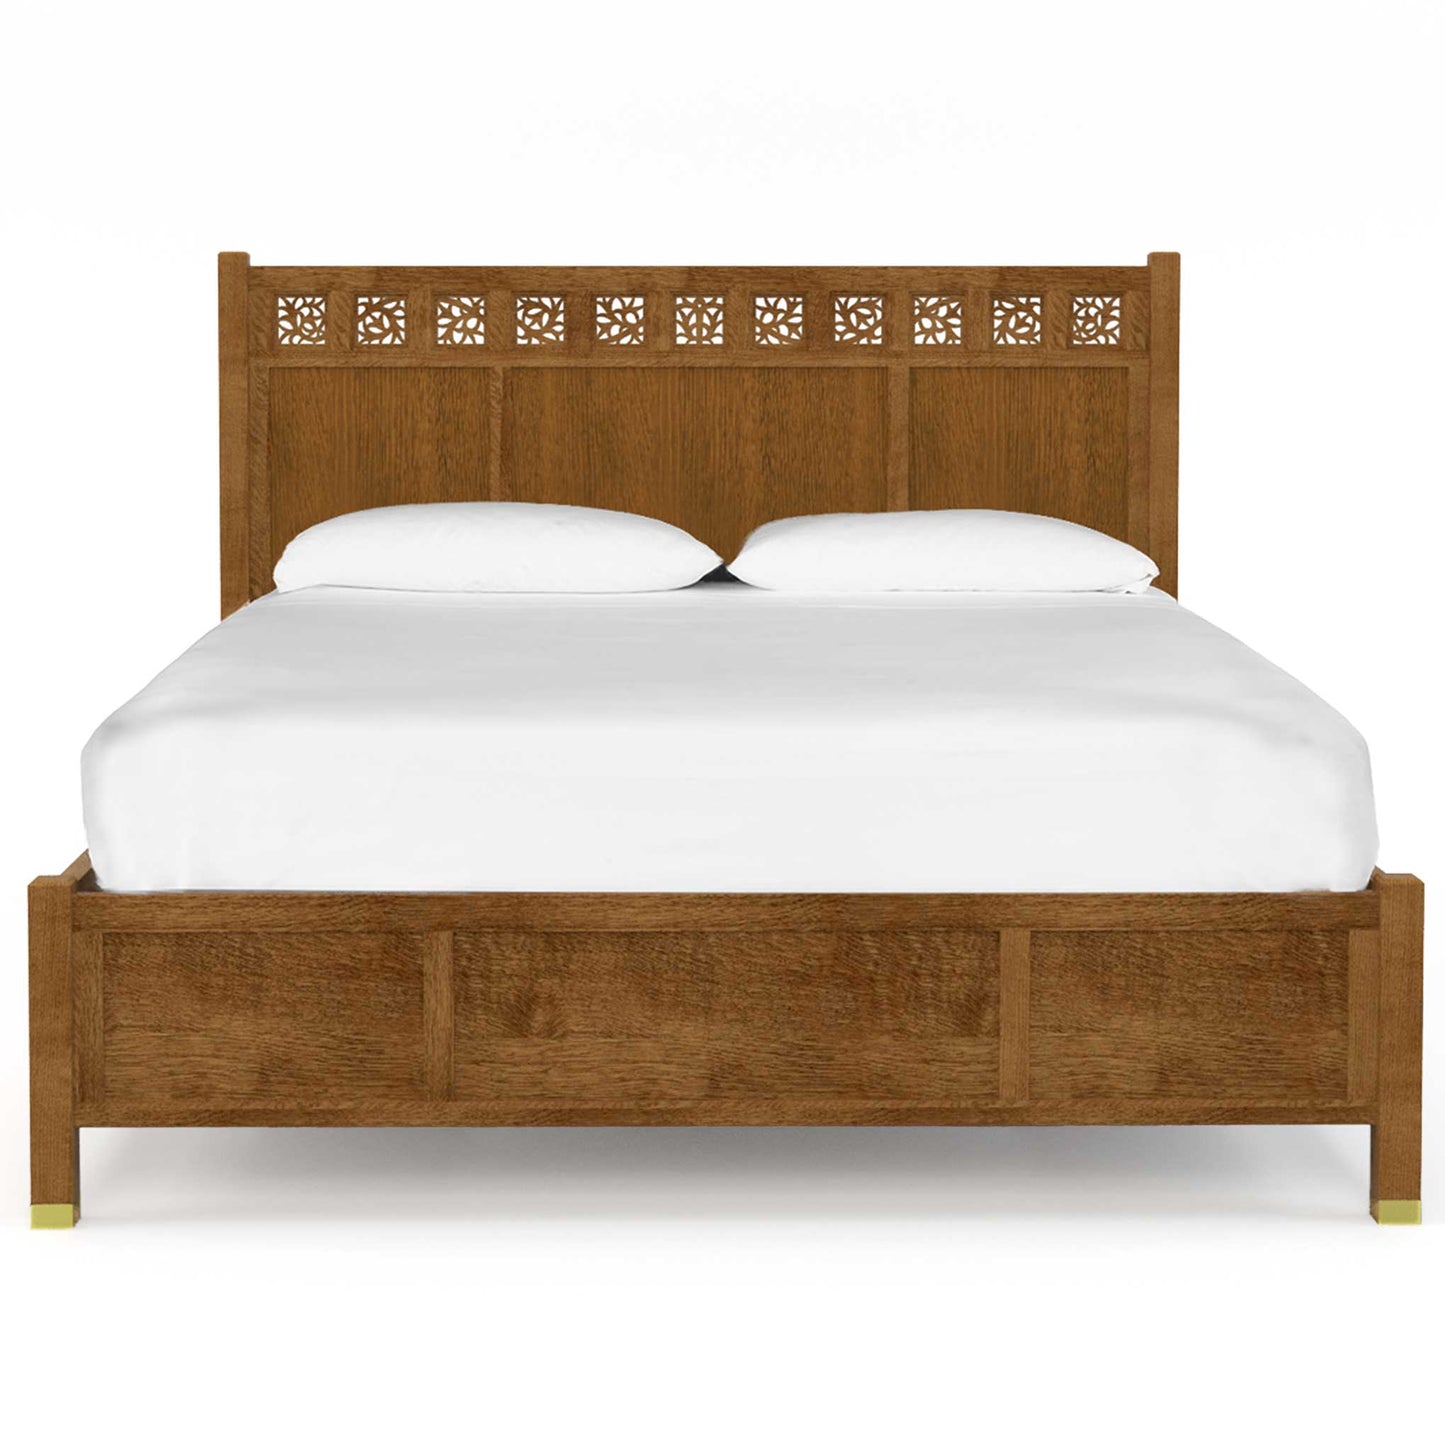 Surrey Hills Panel Bed, King